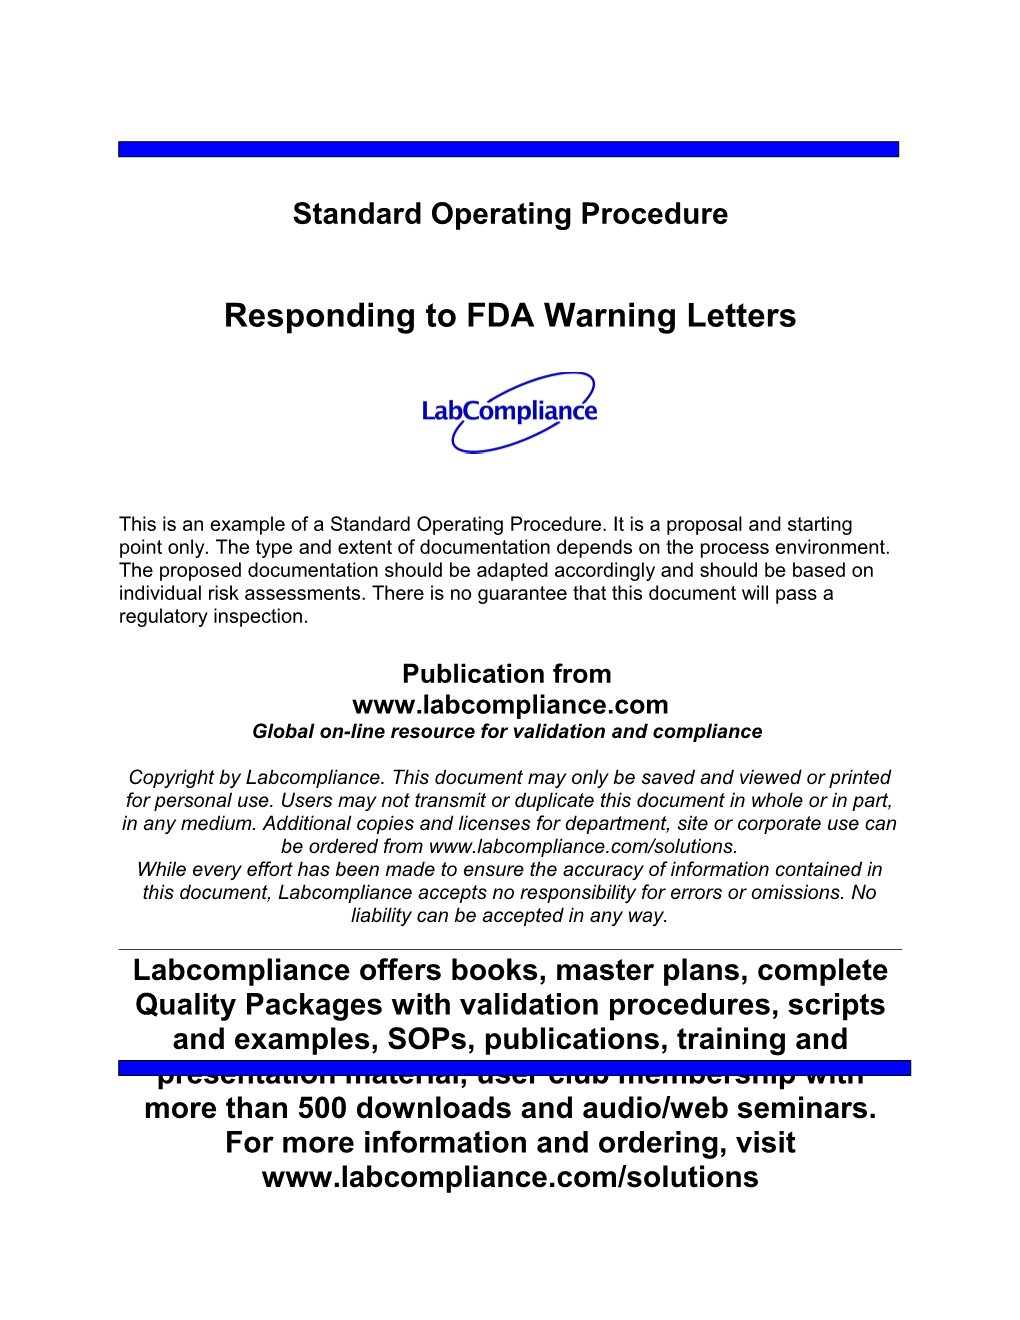 Responding to FDA Warning Letters